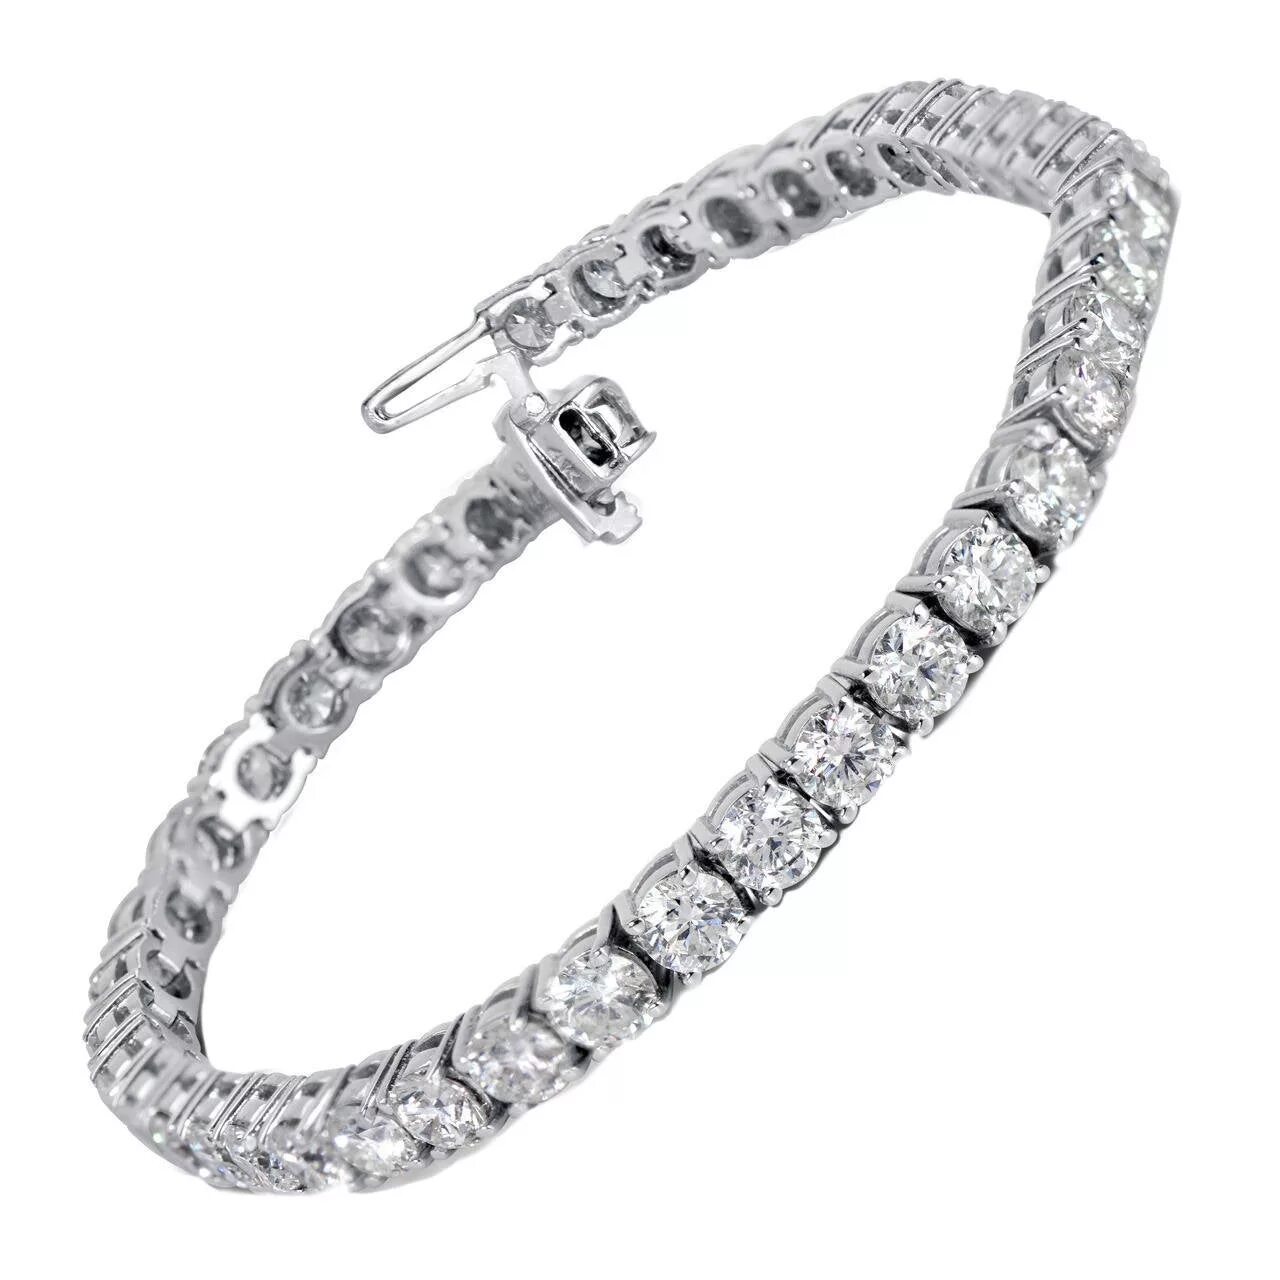 Теннисный браслет first class diamonds. Tennis Bracelet Diamond. Gianni Lazzaro кольцо Diamonds. Браслет 7309532.